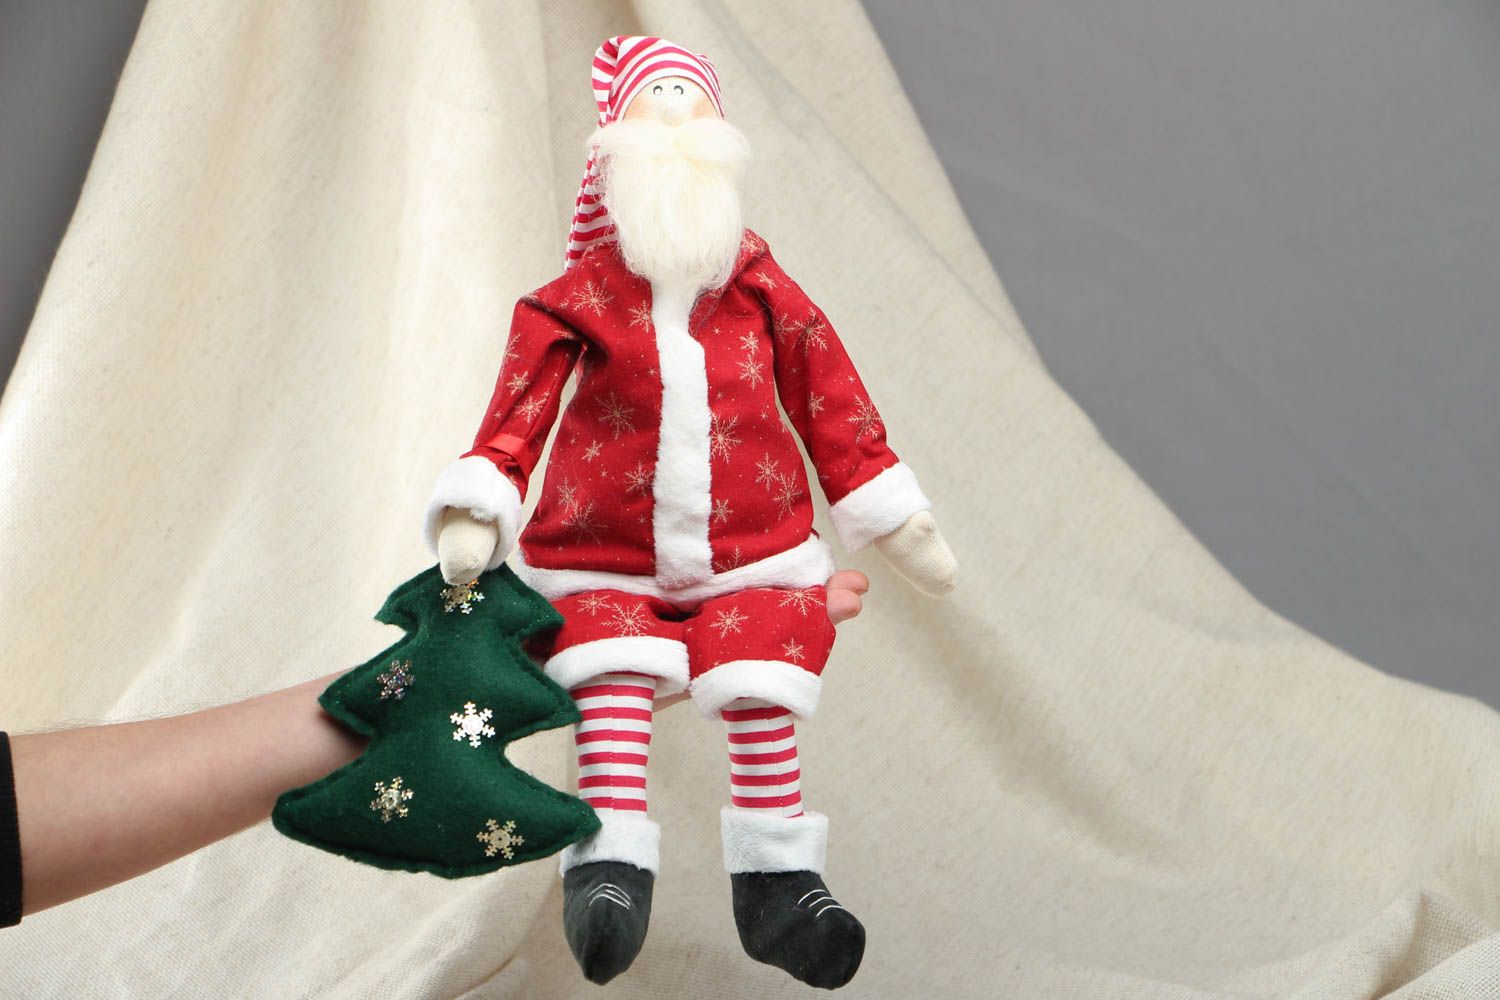 De brinquedo macio em forma de Papai Noel com árvore de Natal foto 4